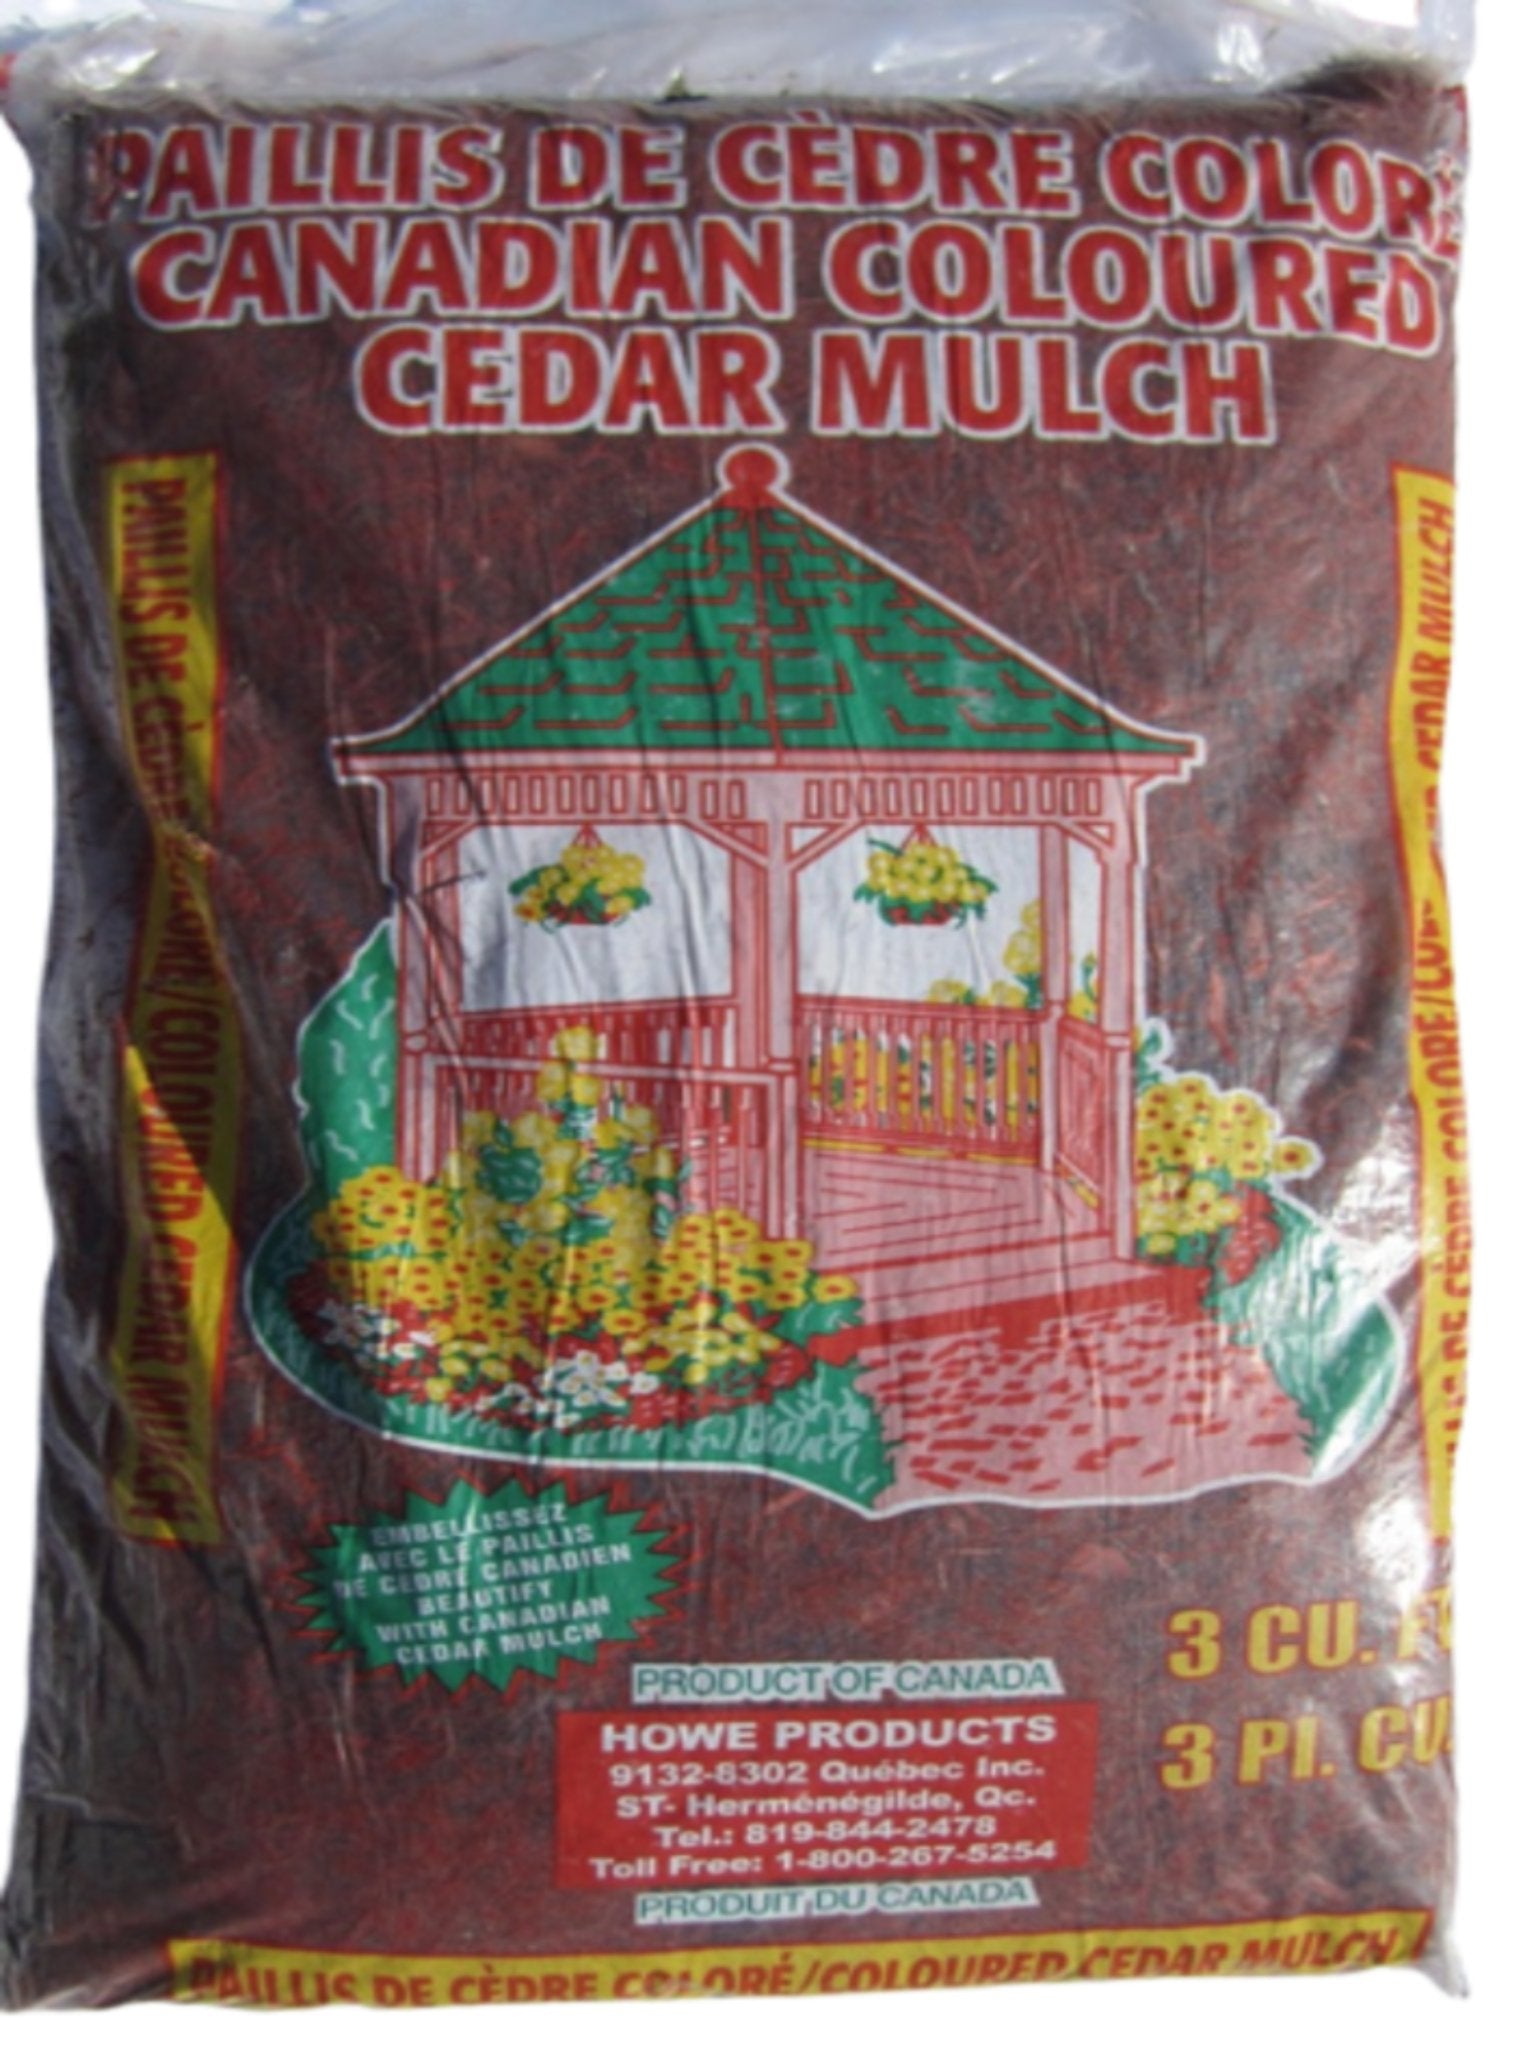 Howe Canadian Coloured Cedar Mulch 3cu.ft.